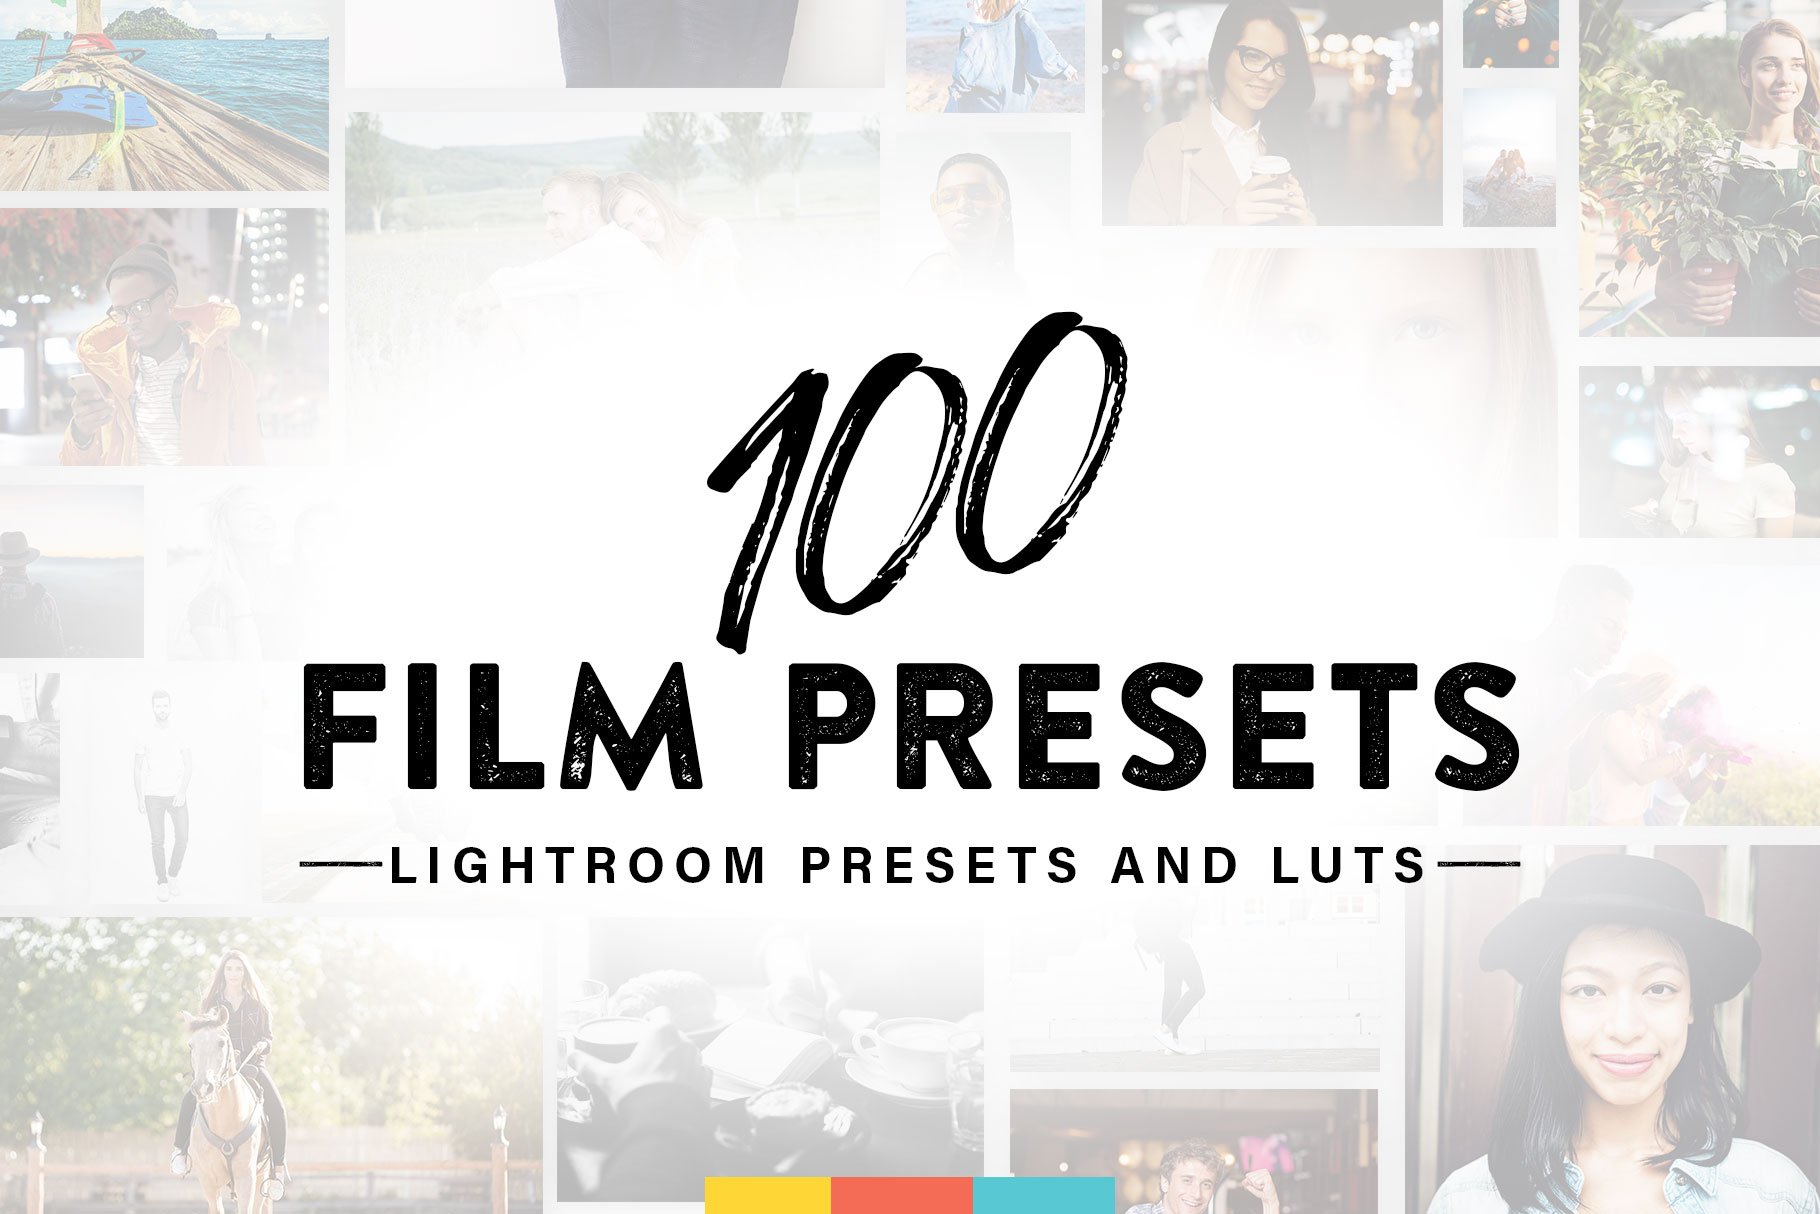 100 Film Lightroom Presets and LUTscover image.